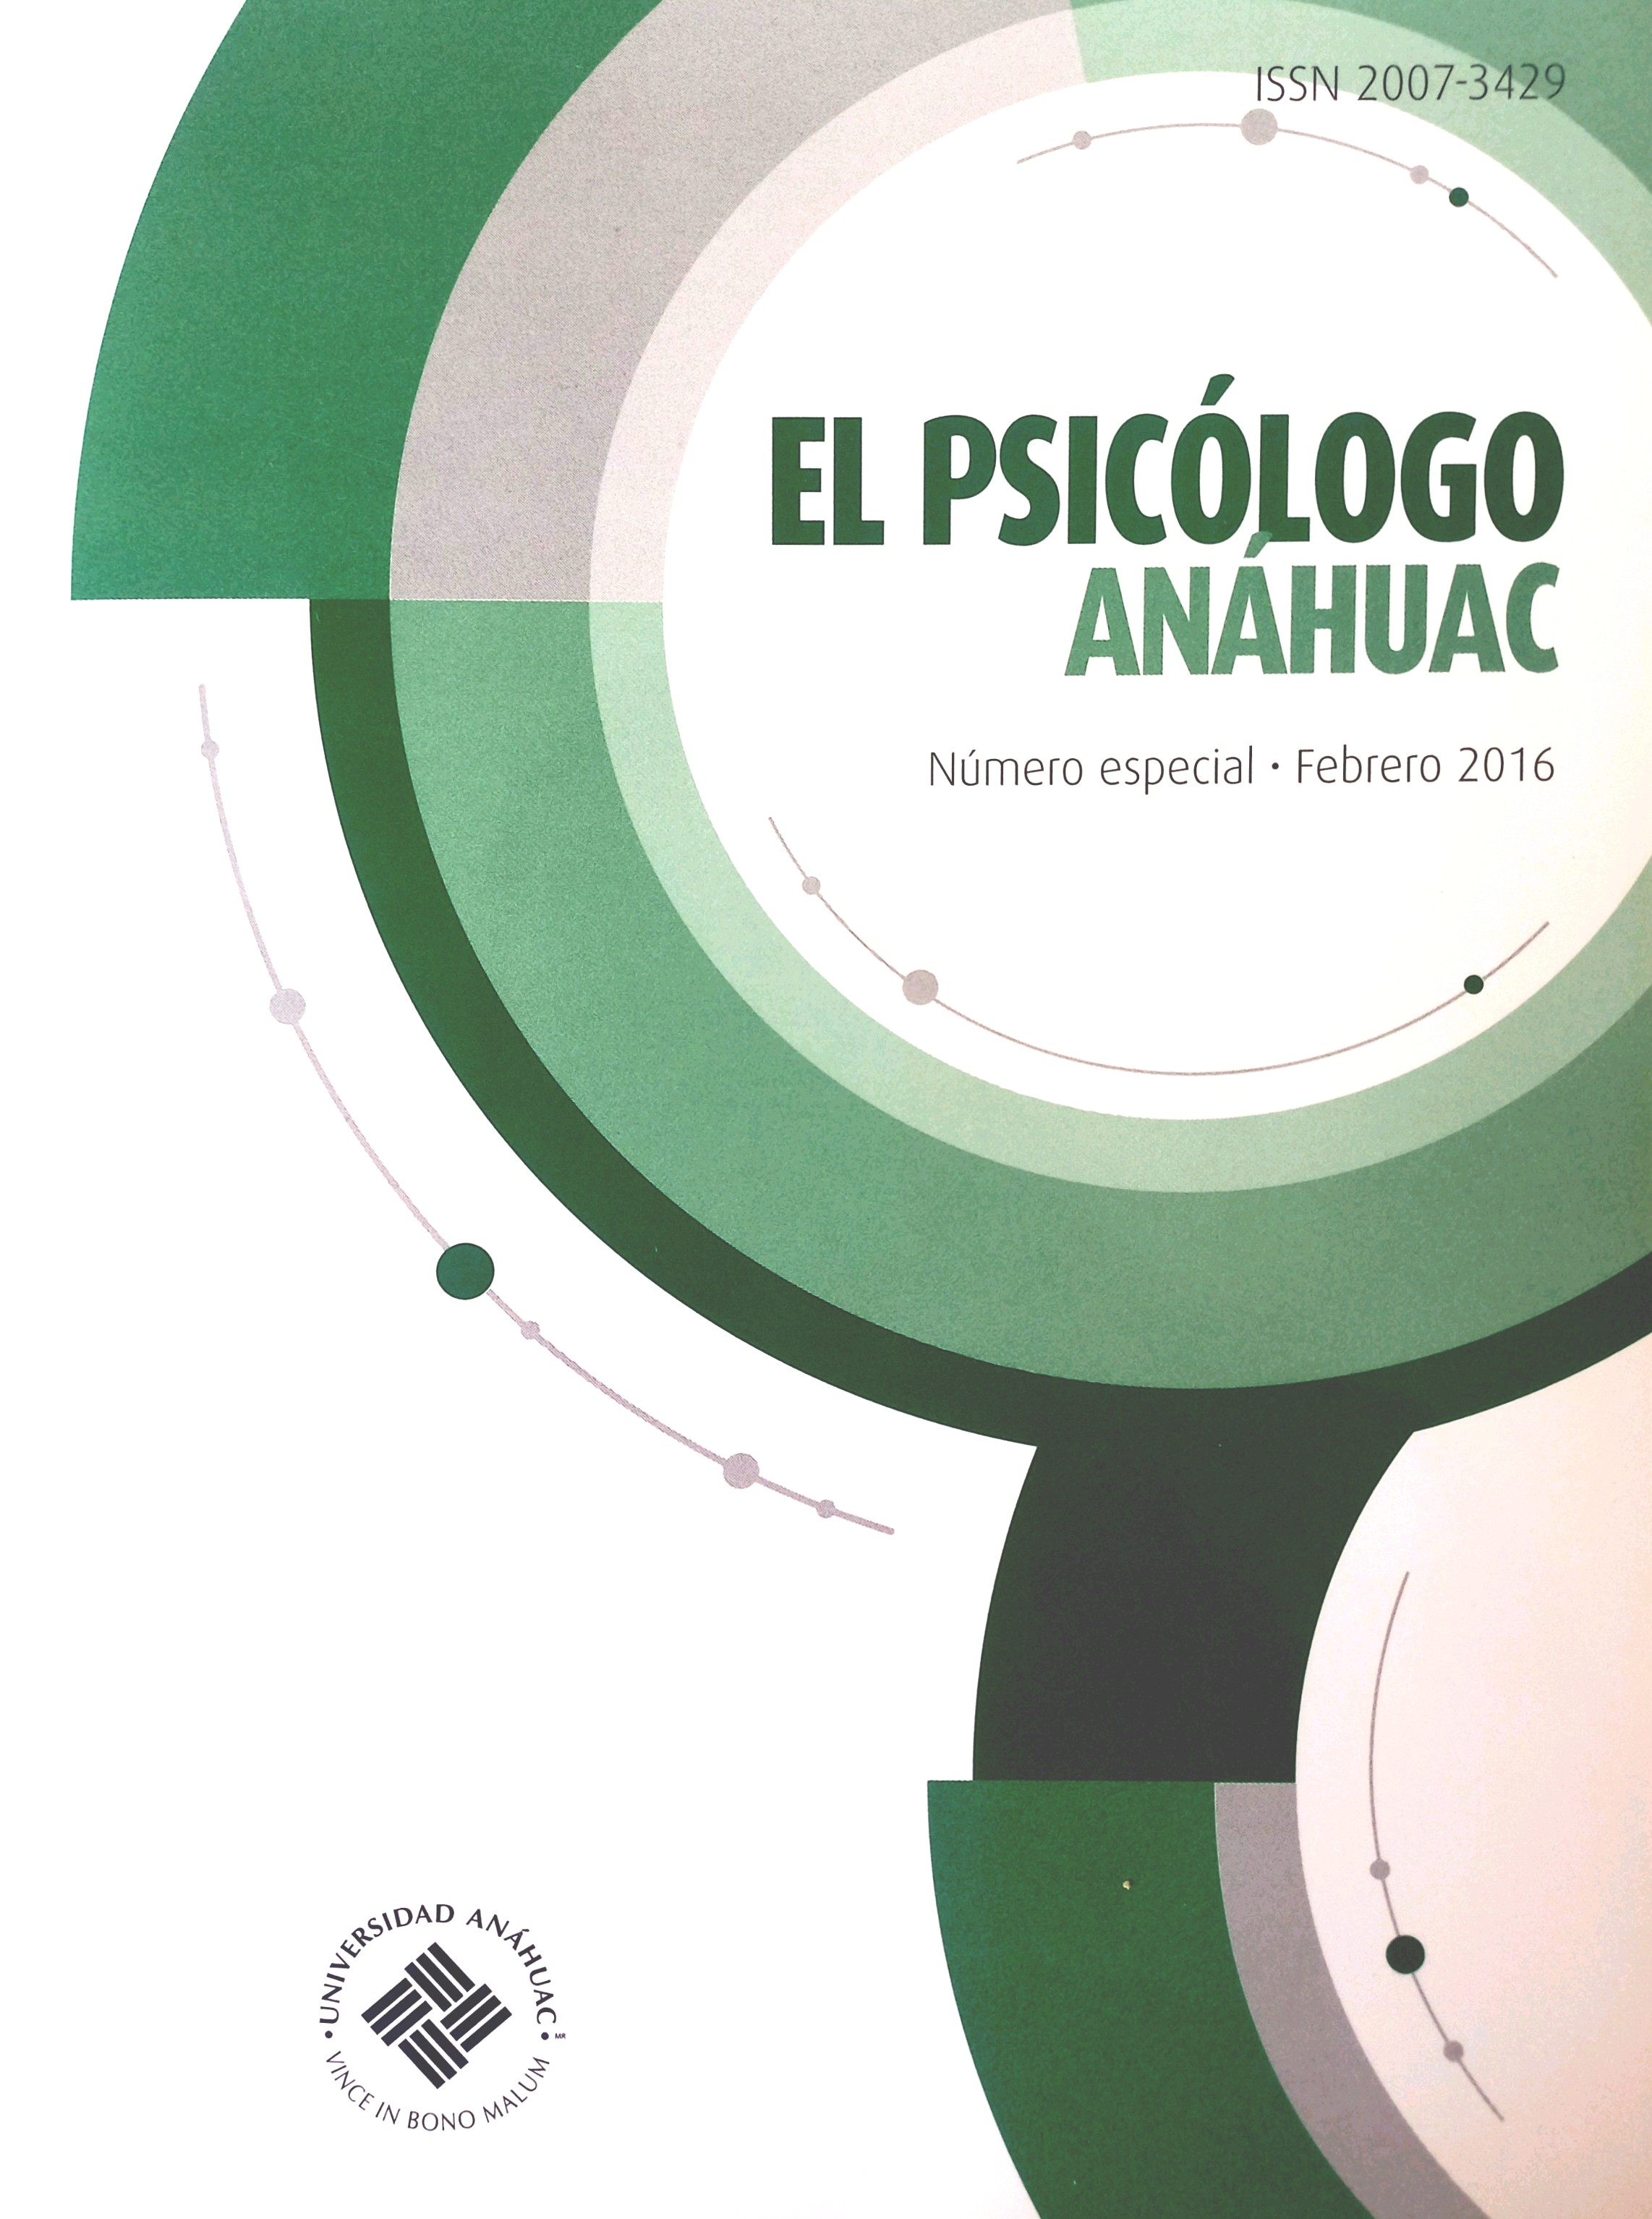 					Ver Vol. 19 Núm. 19 (2016): El Psicólogo Anáhuac, Vol. 19 (número especial)
				